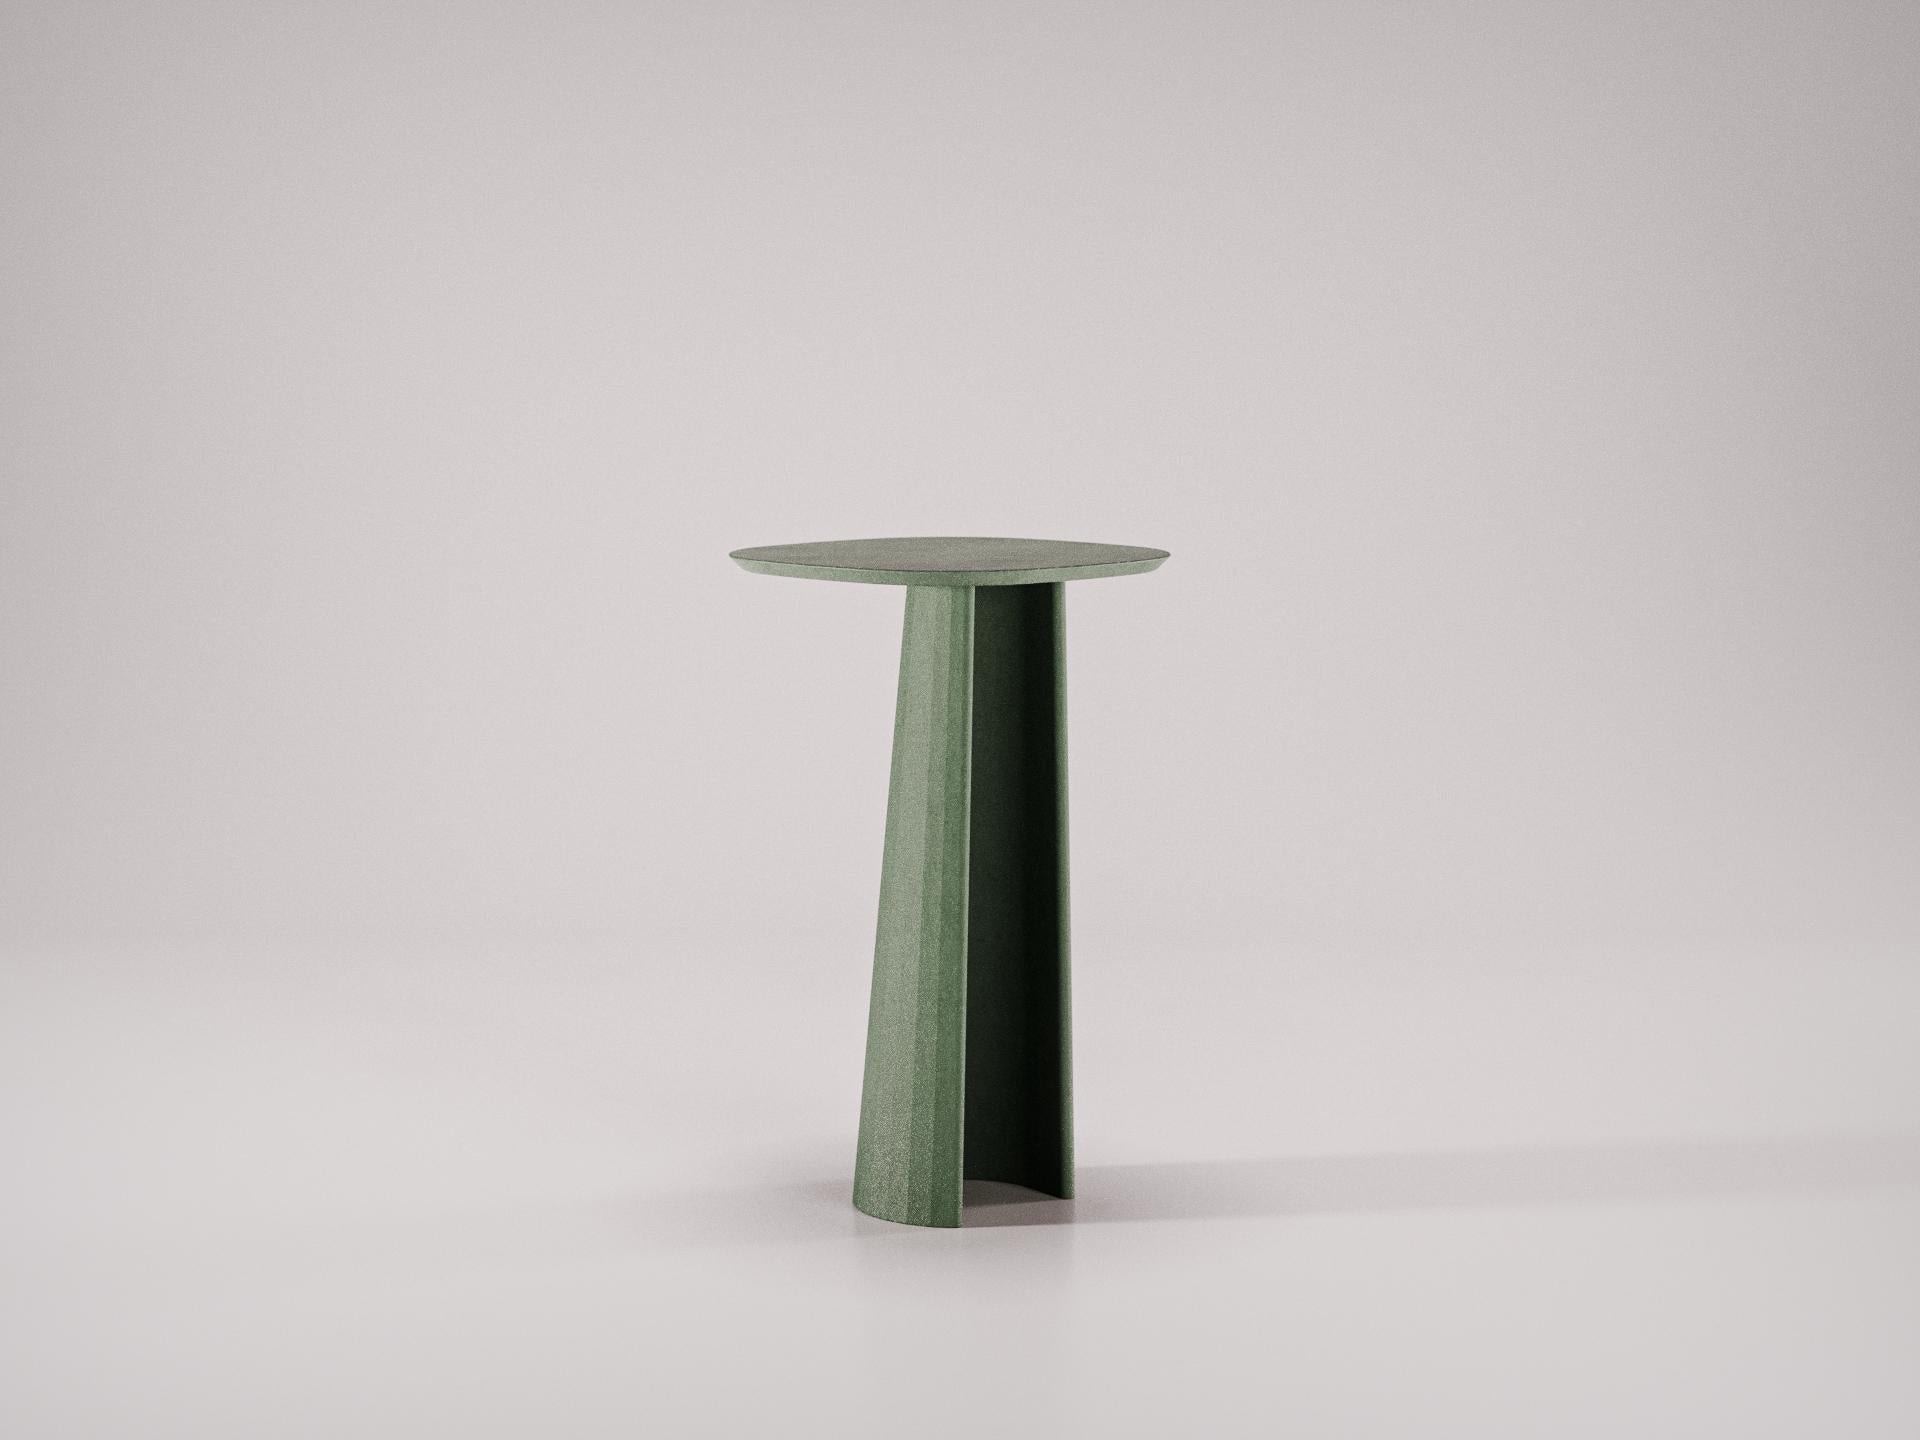 Italian Studio Irvine for F&C Fusto Concrete Pedestal h82 Chocolate Cement Handmade For Sale